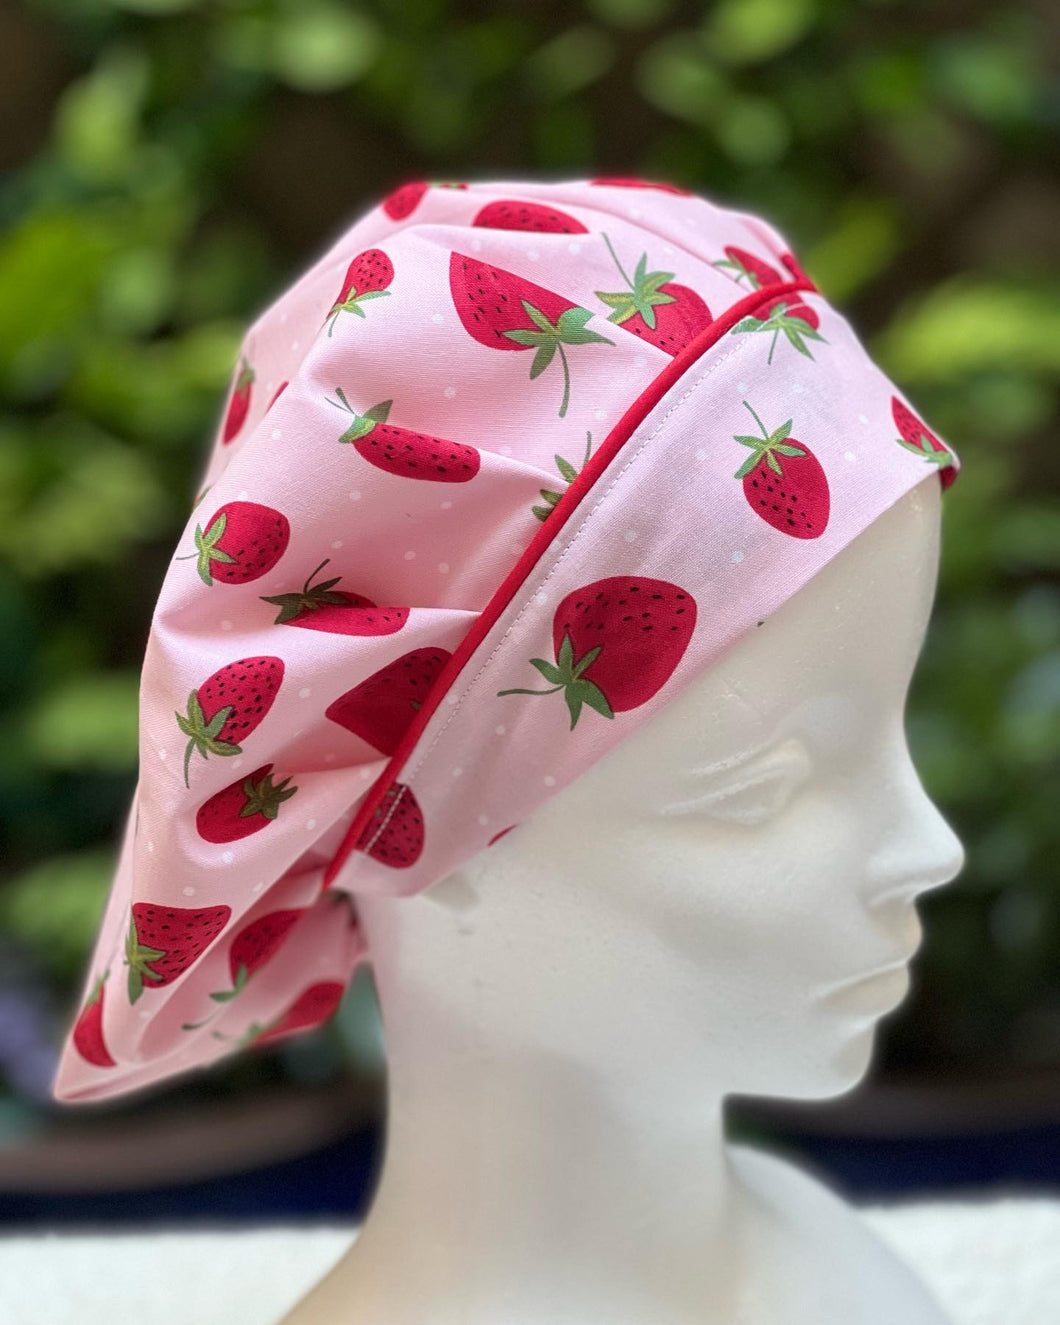 Strawberry bouffant cap